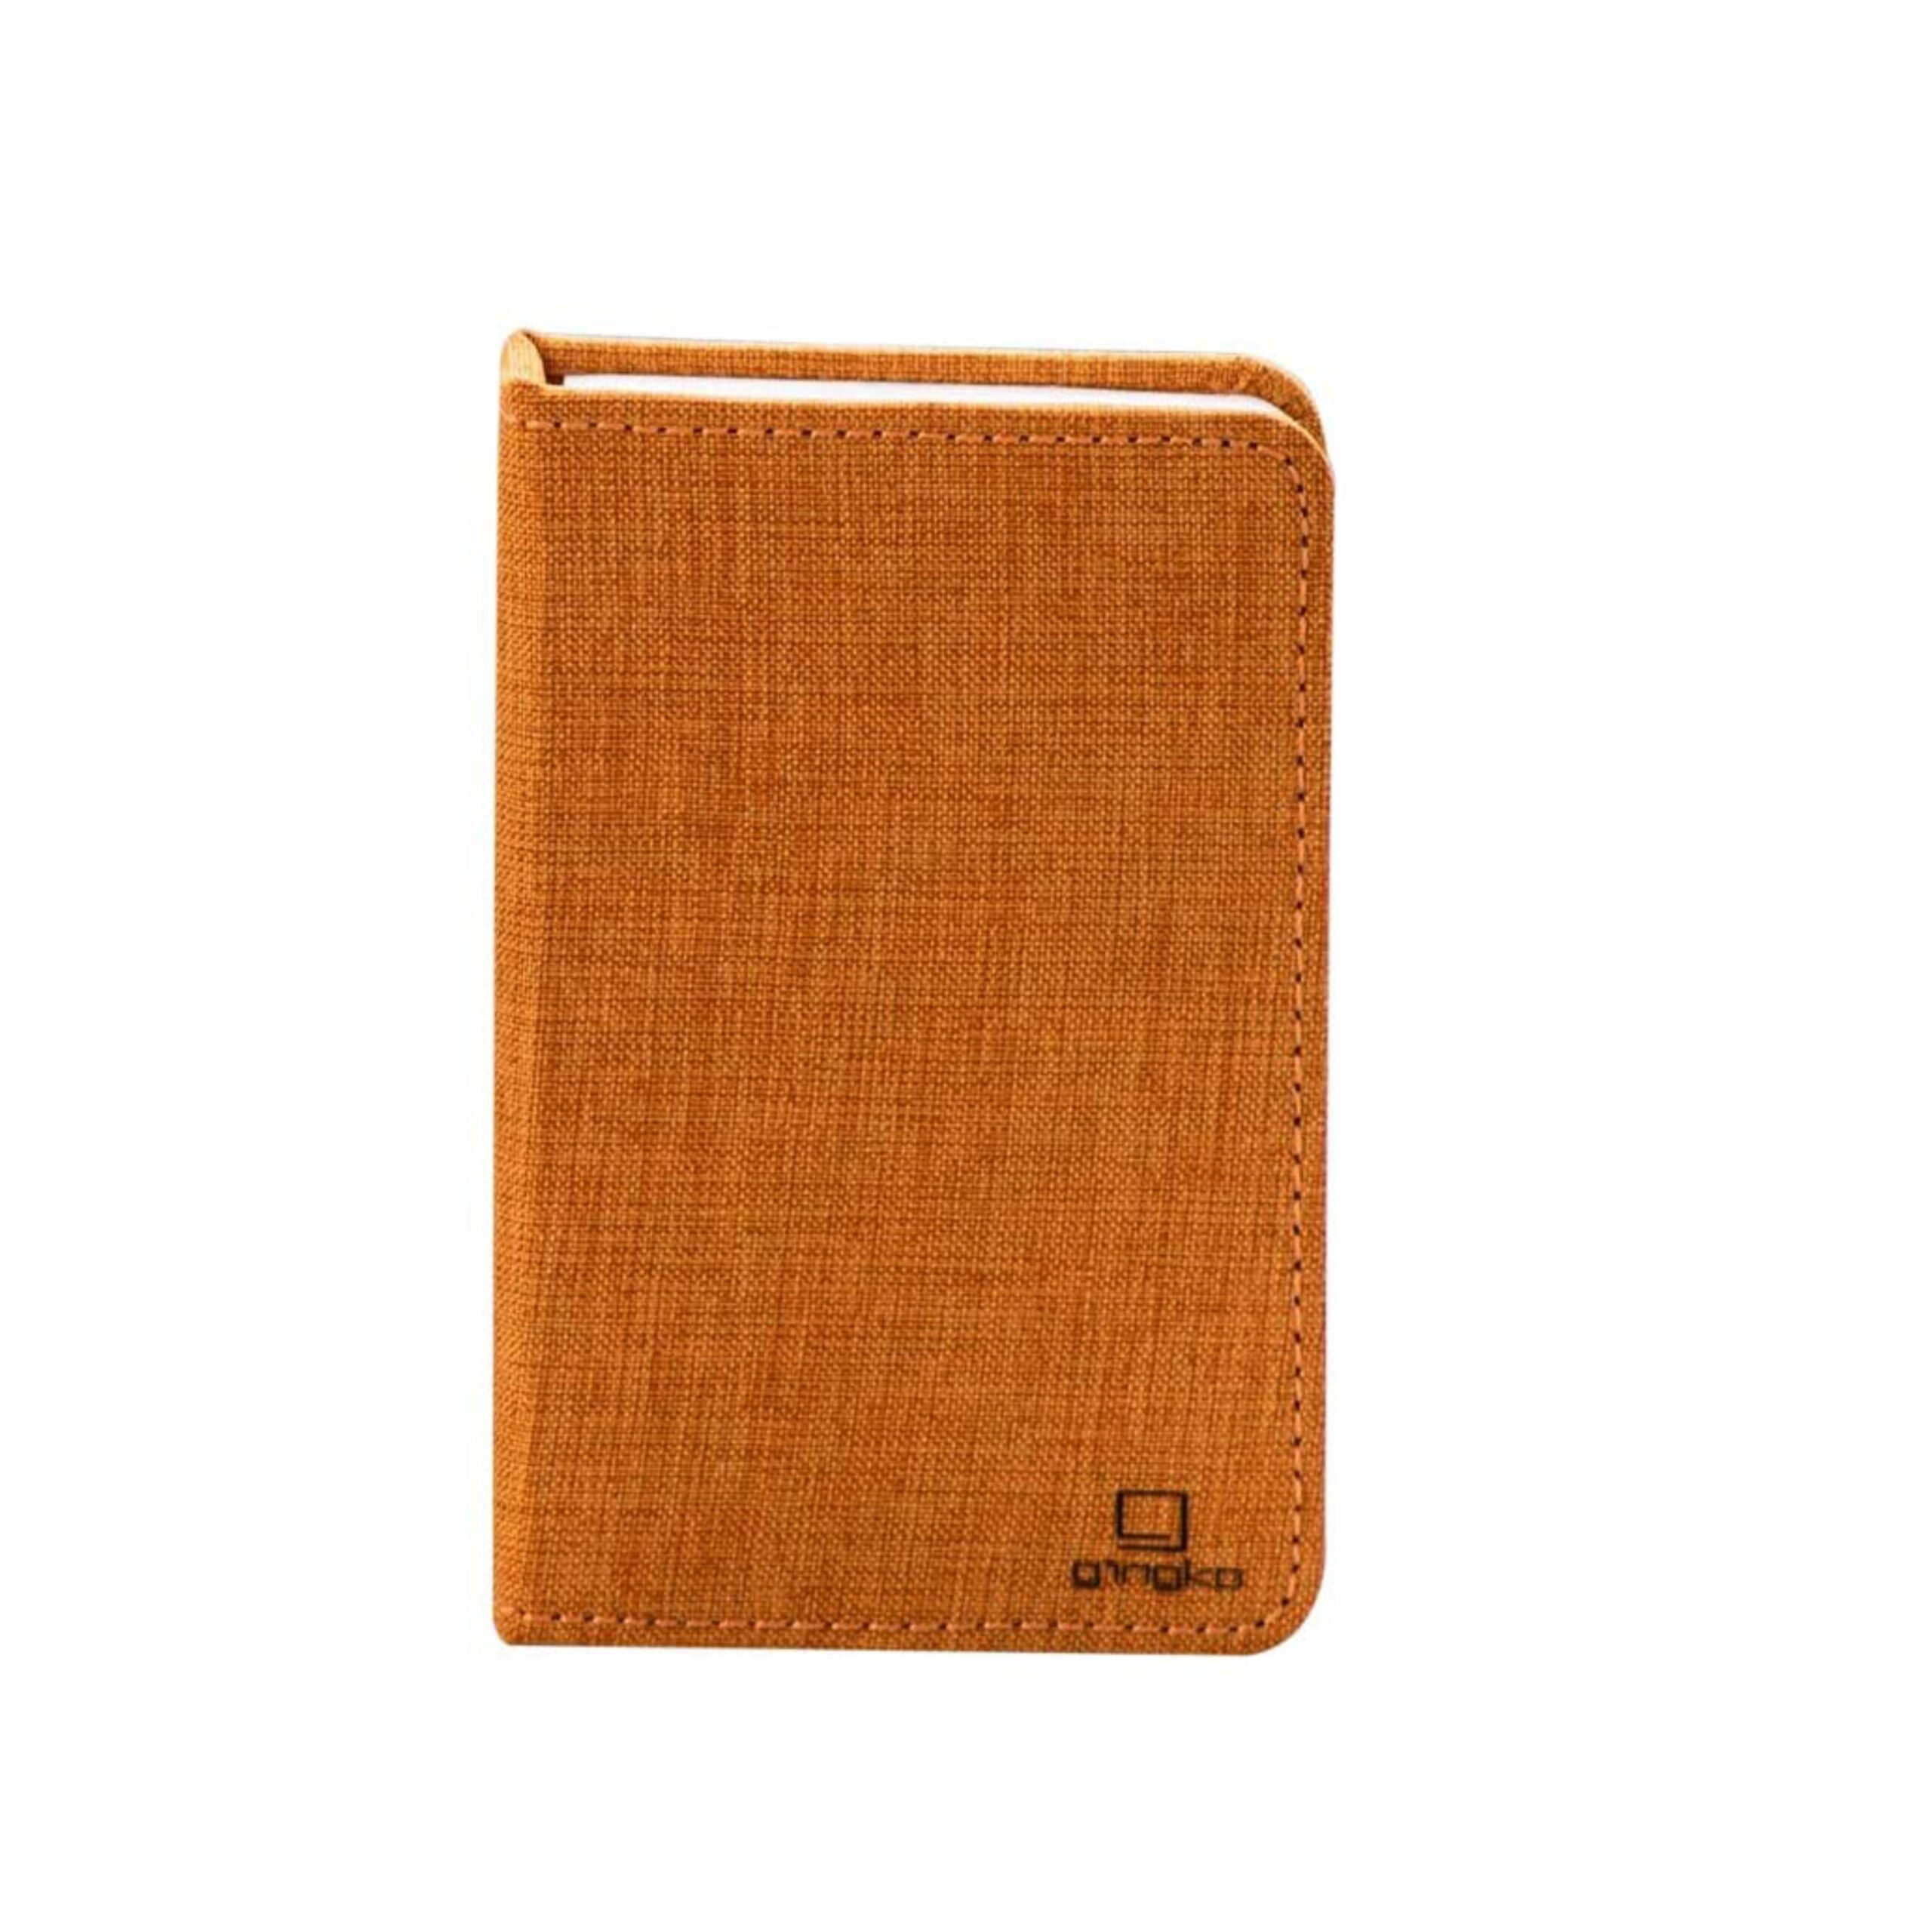 Gingko smart mini book light in orange no background